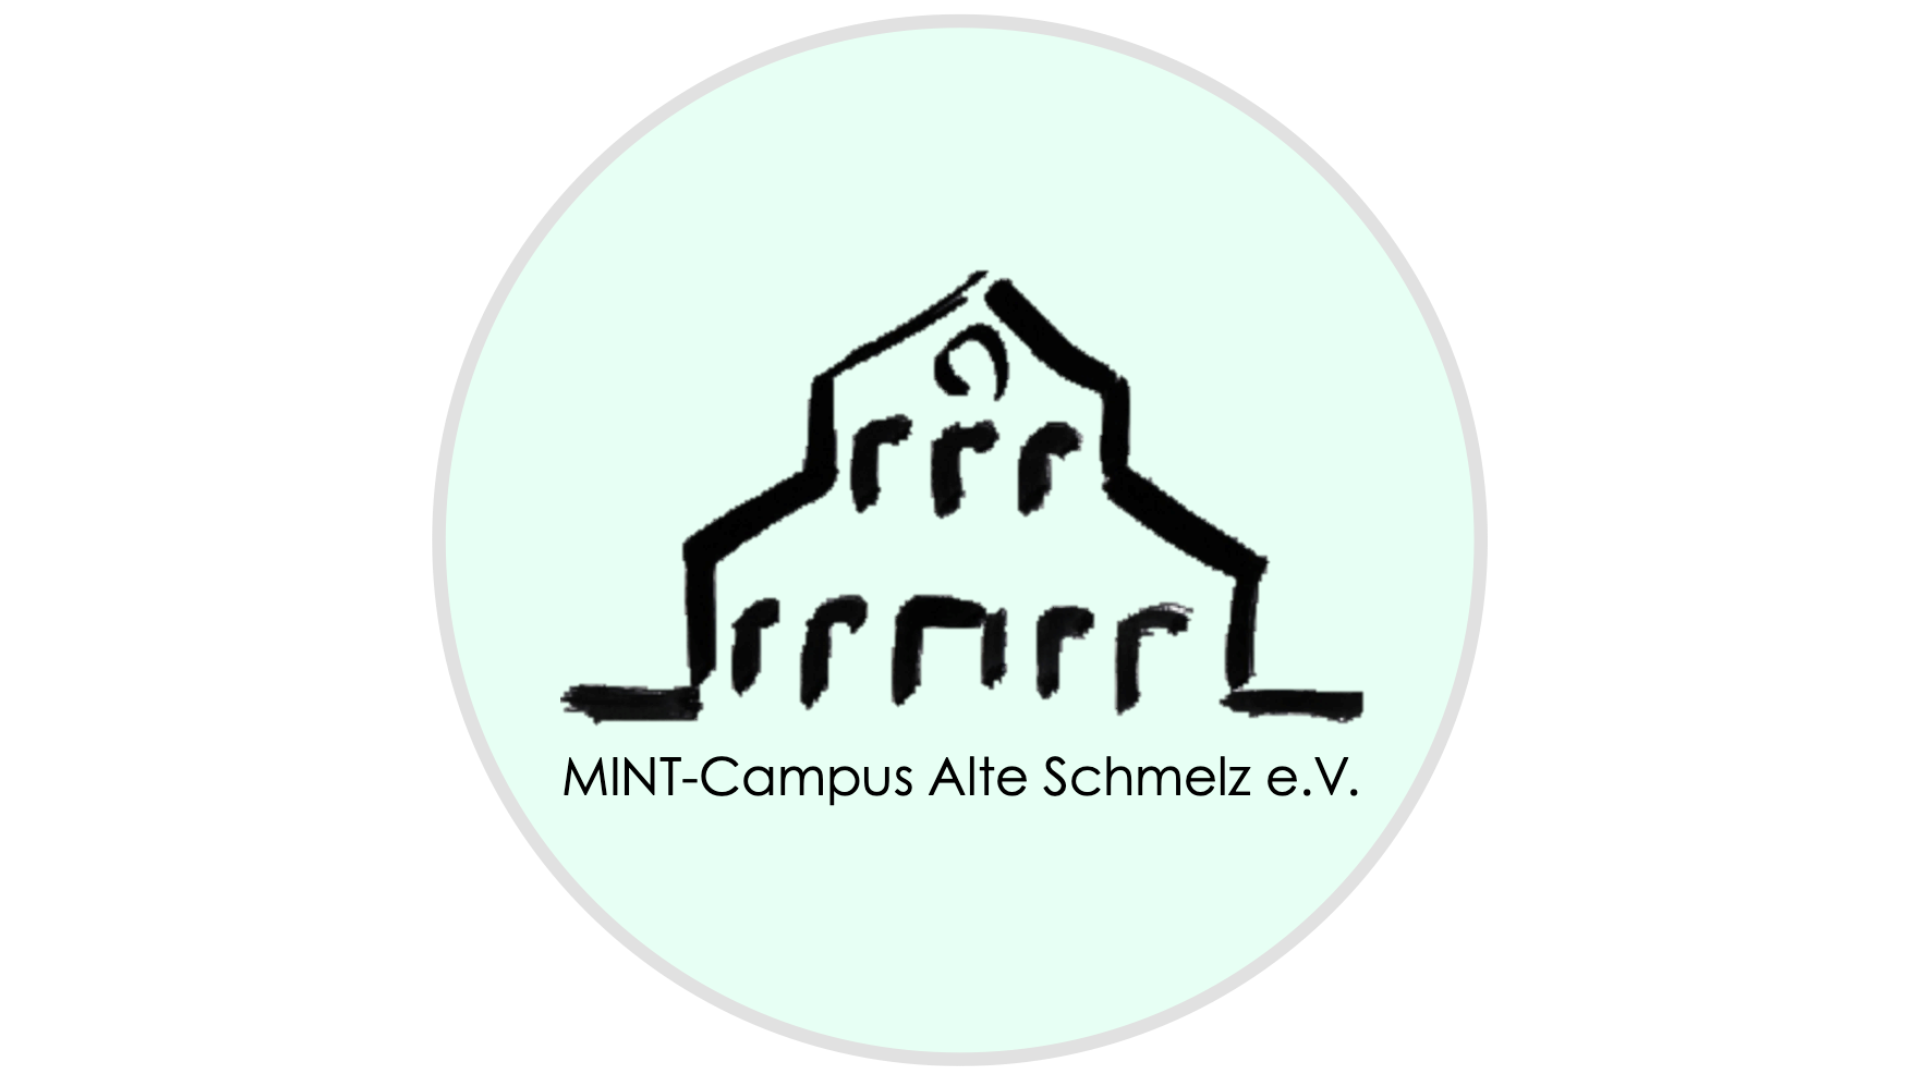 MINT-Campus Alte Schmelz e. V.